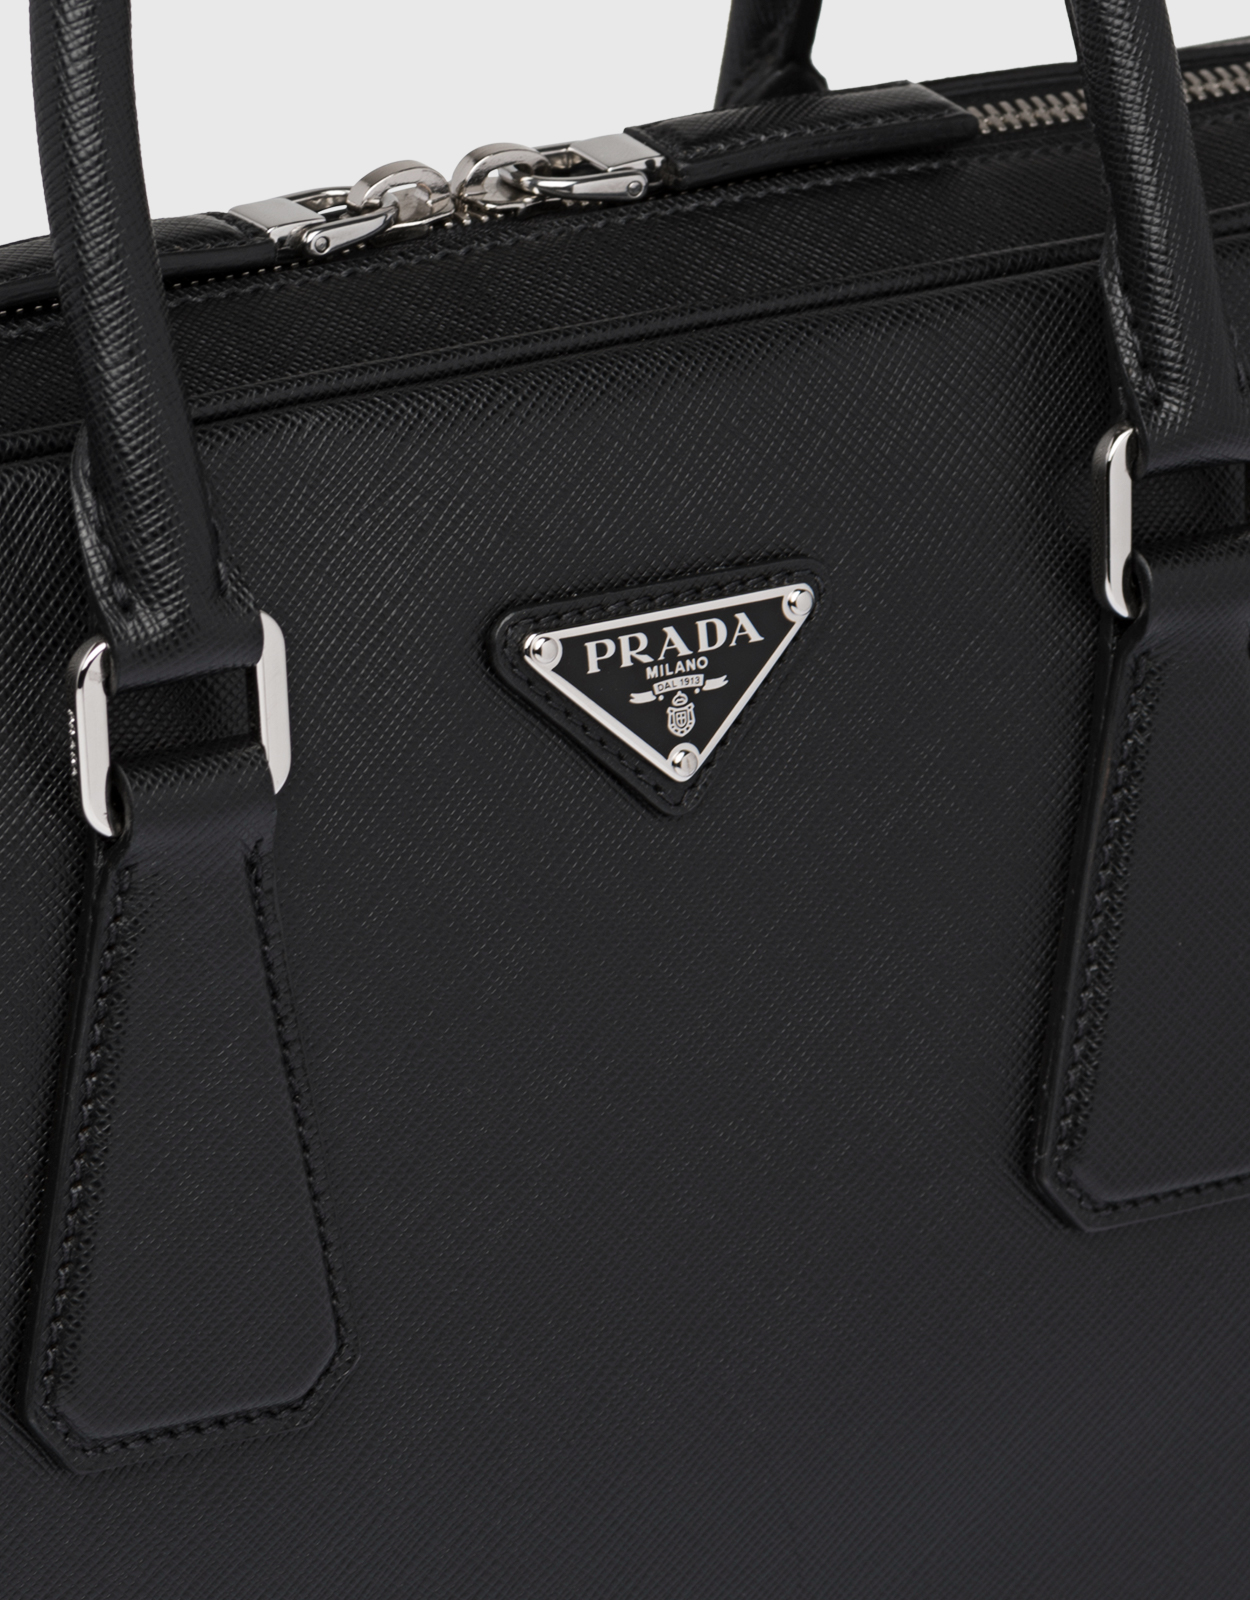 Black Saffiano Leather Work Bag